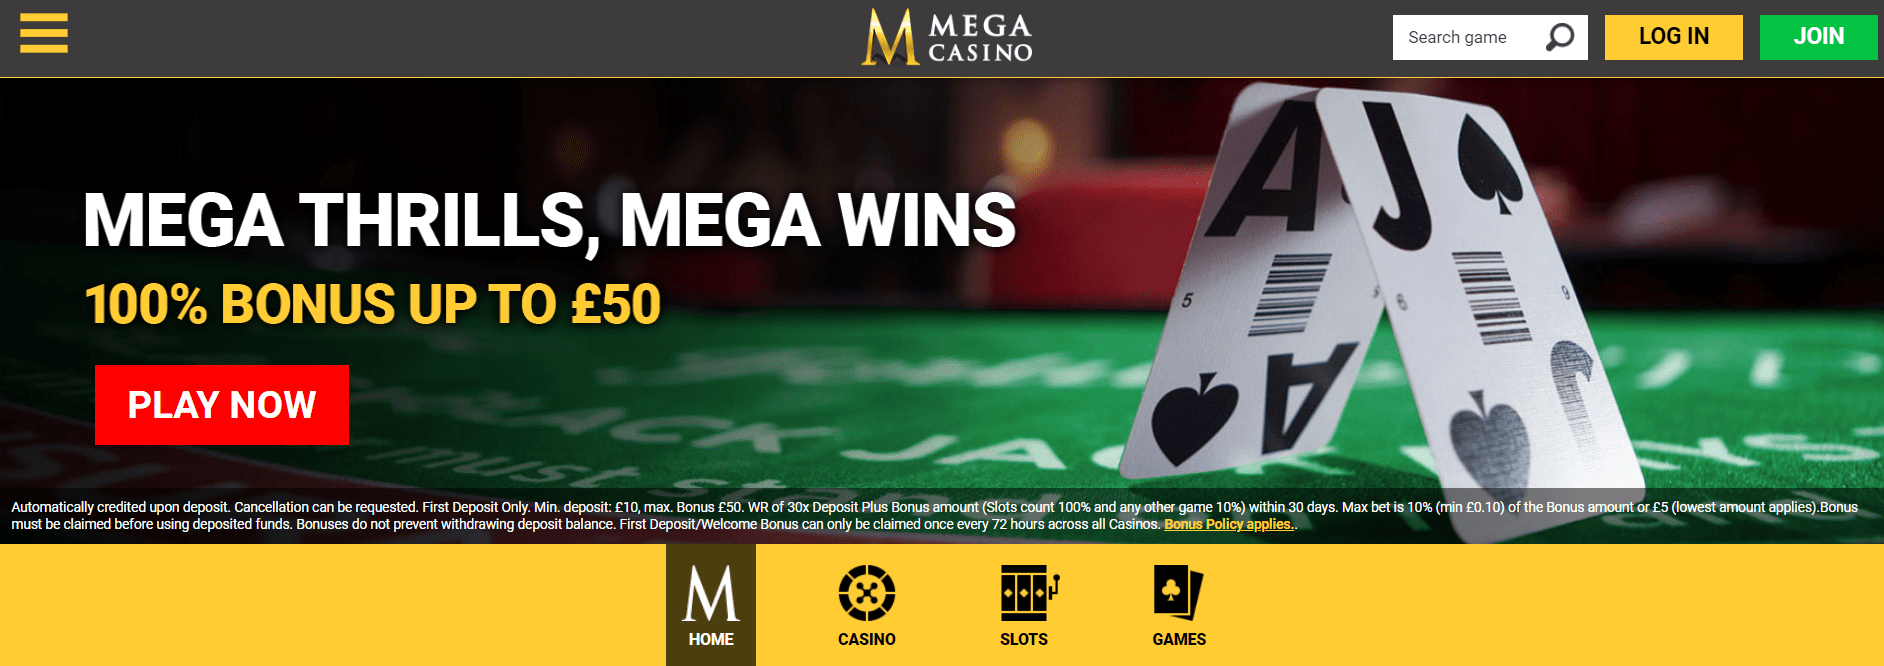 mega casino website